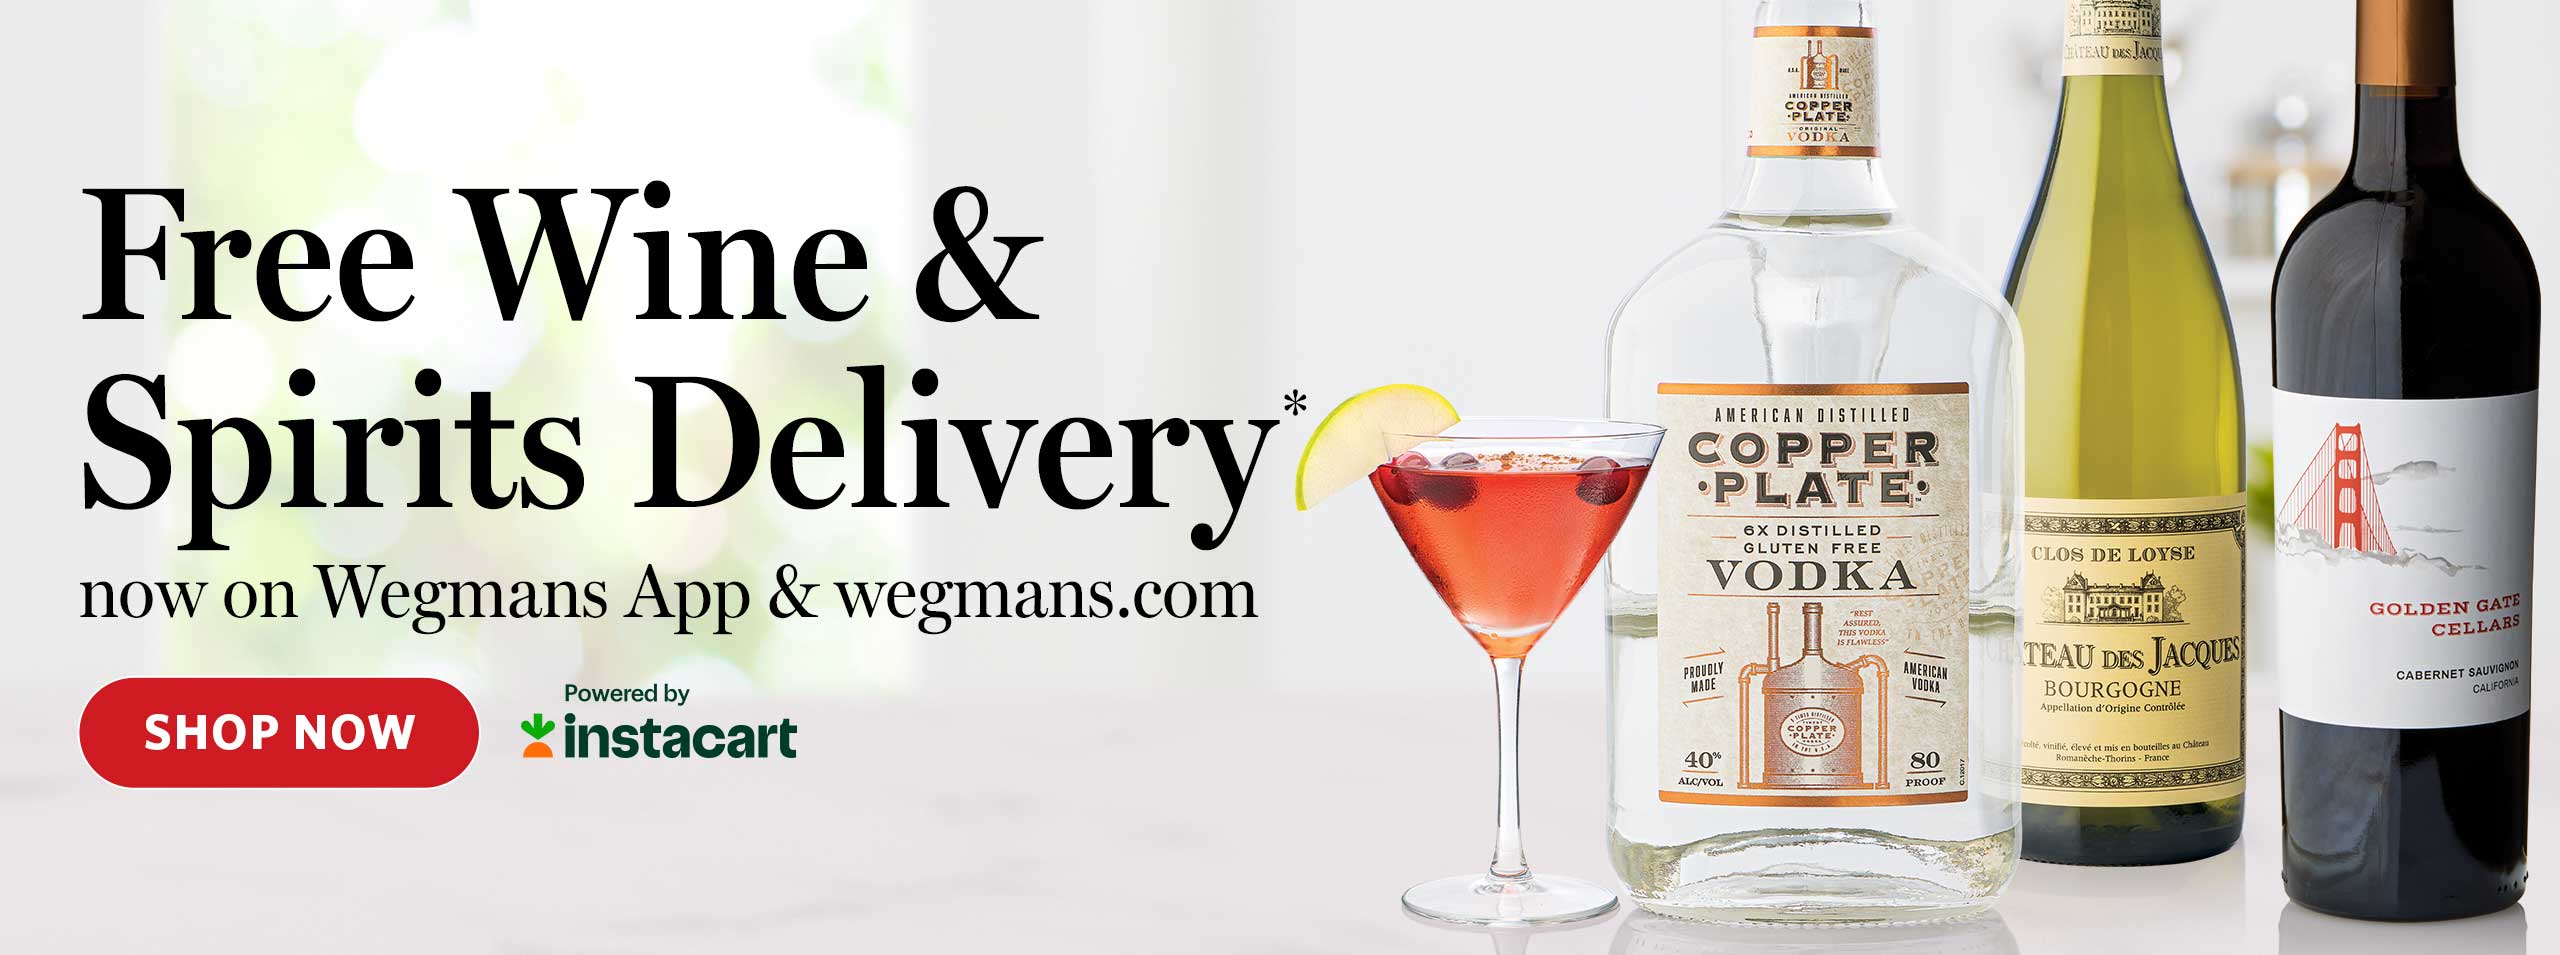 Free Wine & Spirits Delivery on the Wegmans app & wegmans.com